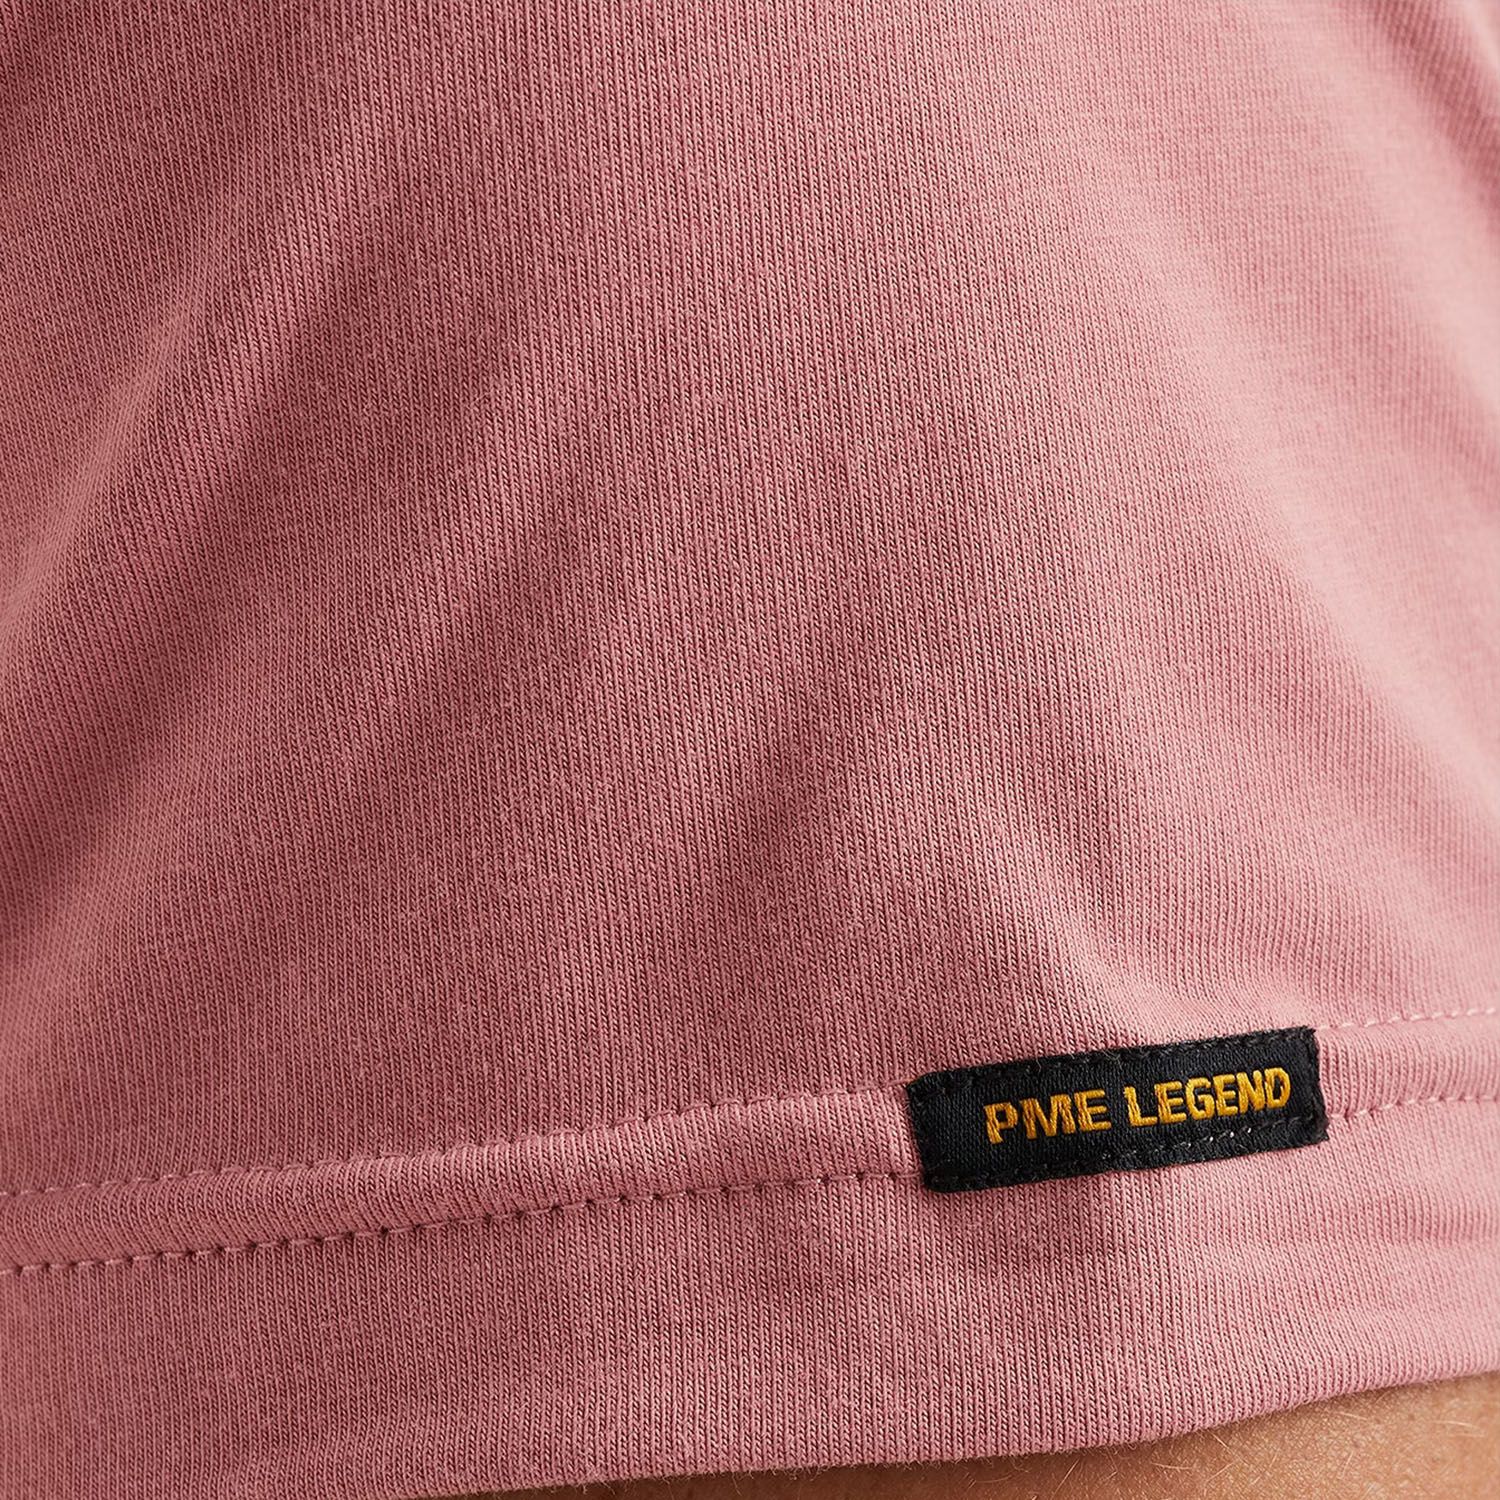 Pme Legend T-shirt Guyver Roze 